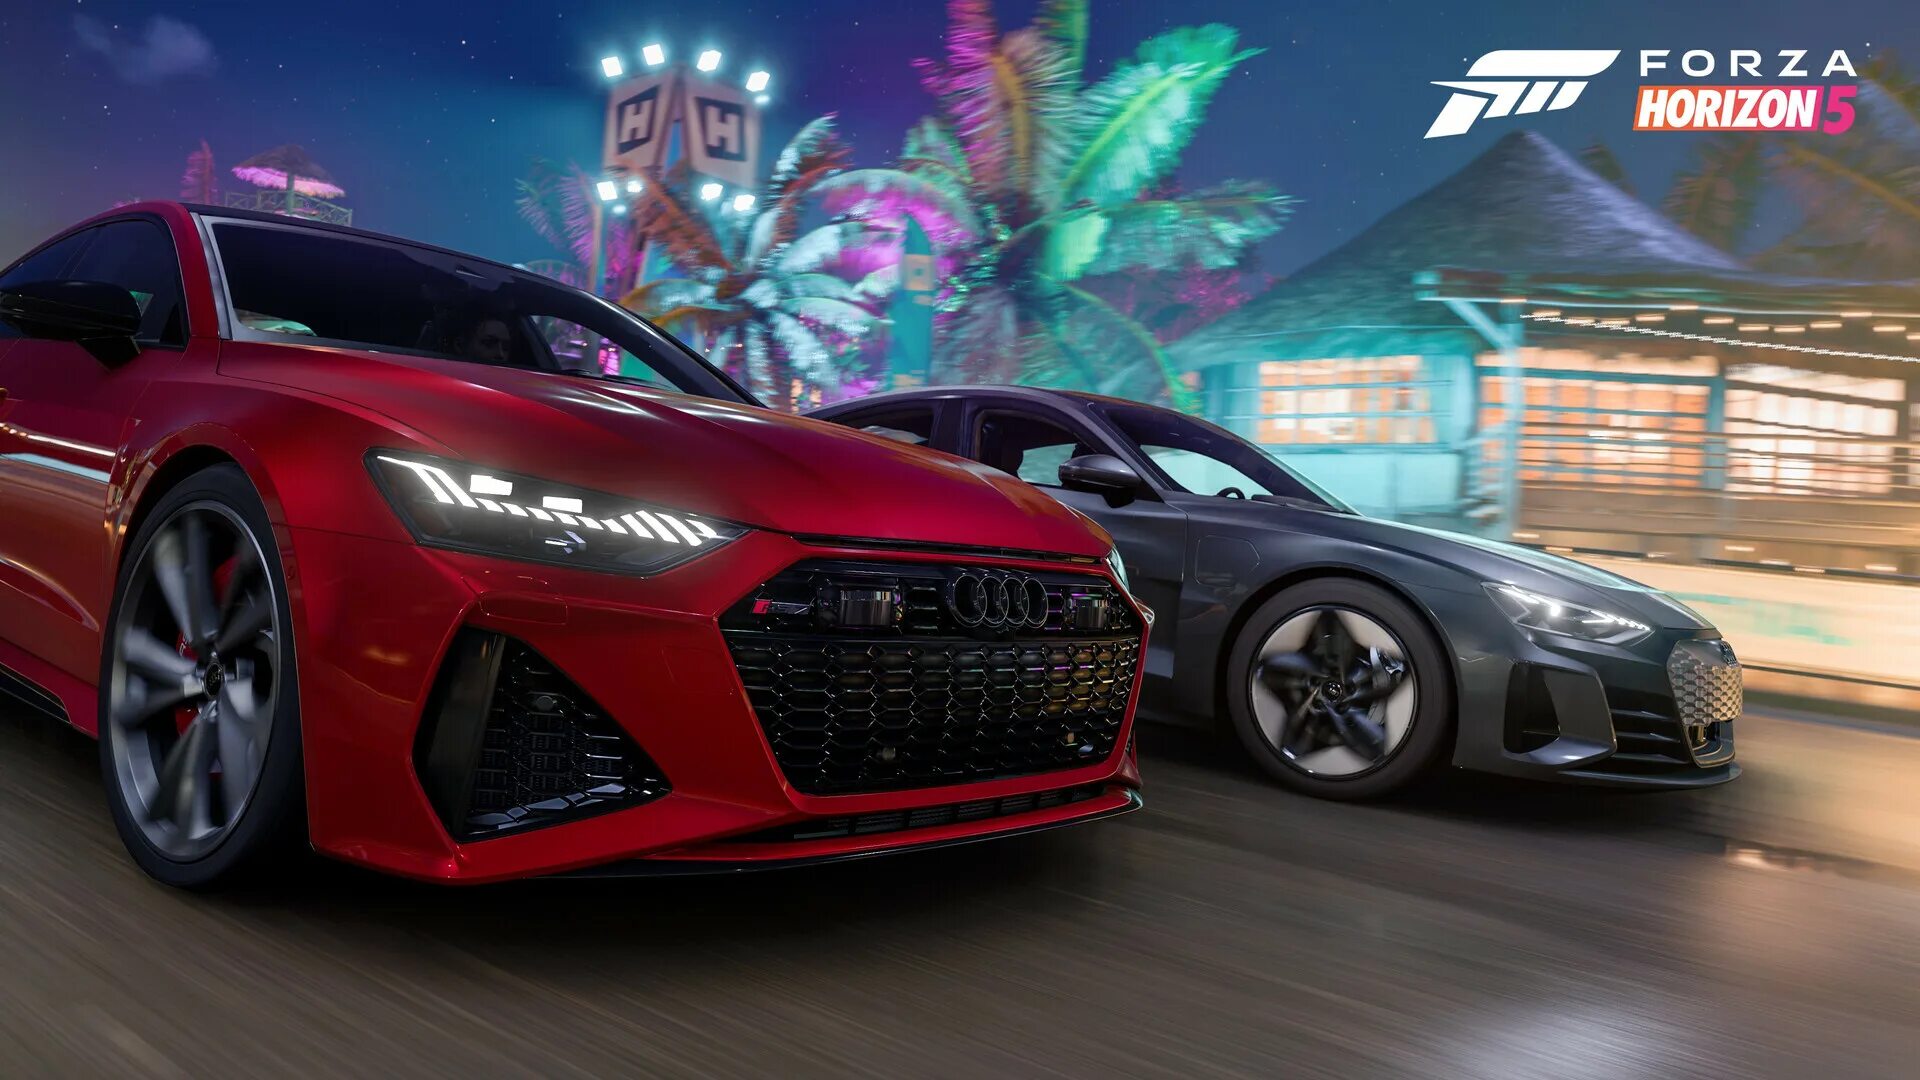 Forza horizon 5 crack. Forza Horizon 5 Audi. Adi RS 5 Forza Horizon 4. Forza Horizon 5 Audi e tron. Forza Horizon 5 Audi rs7.